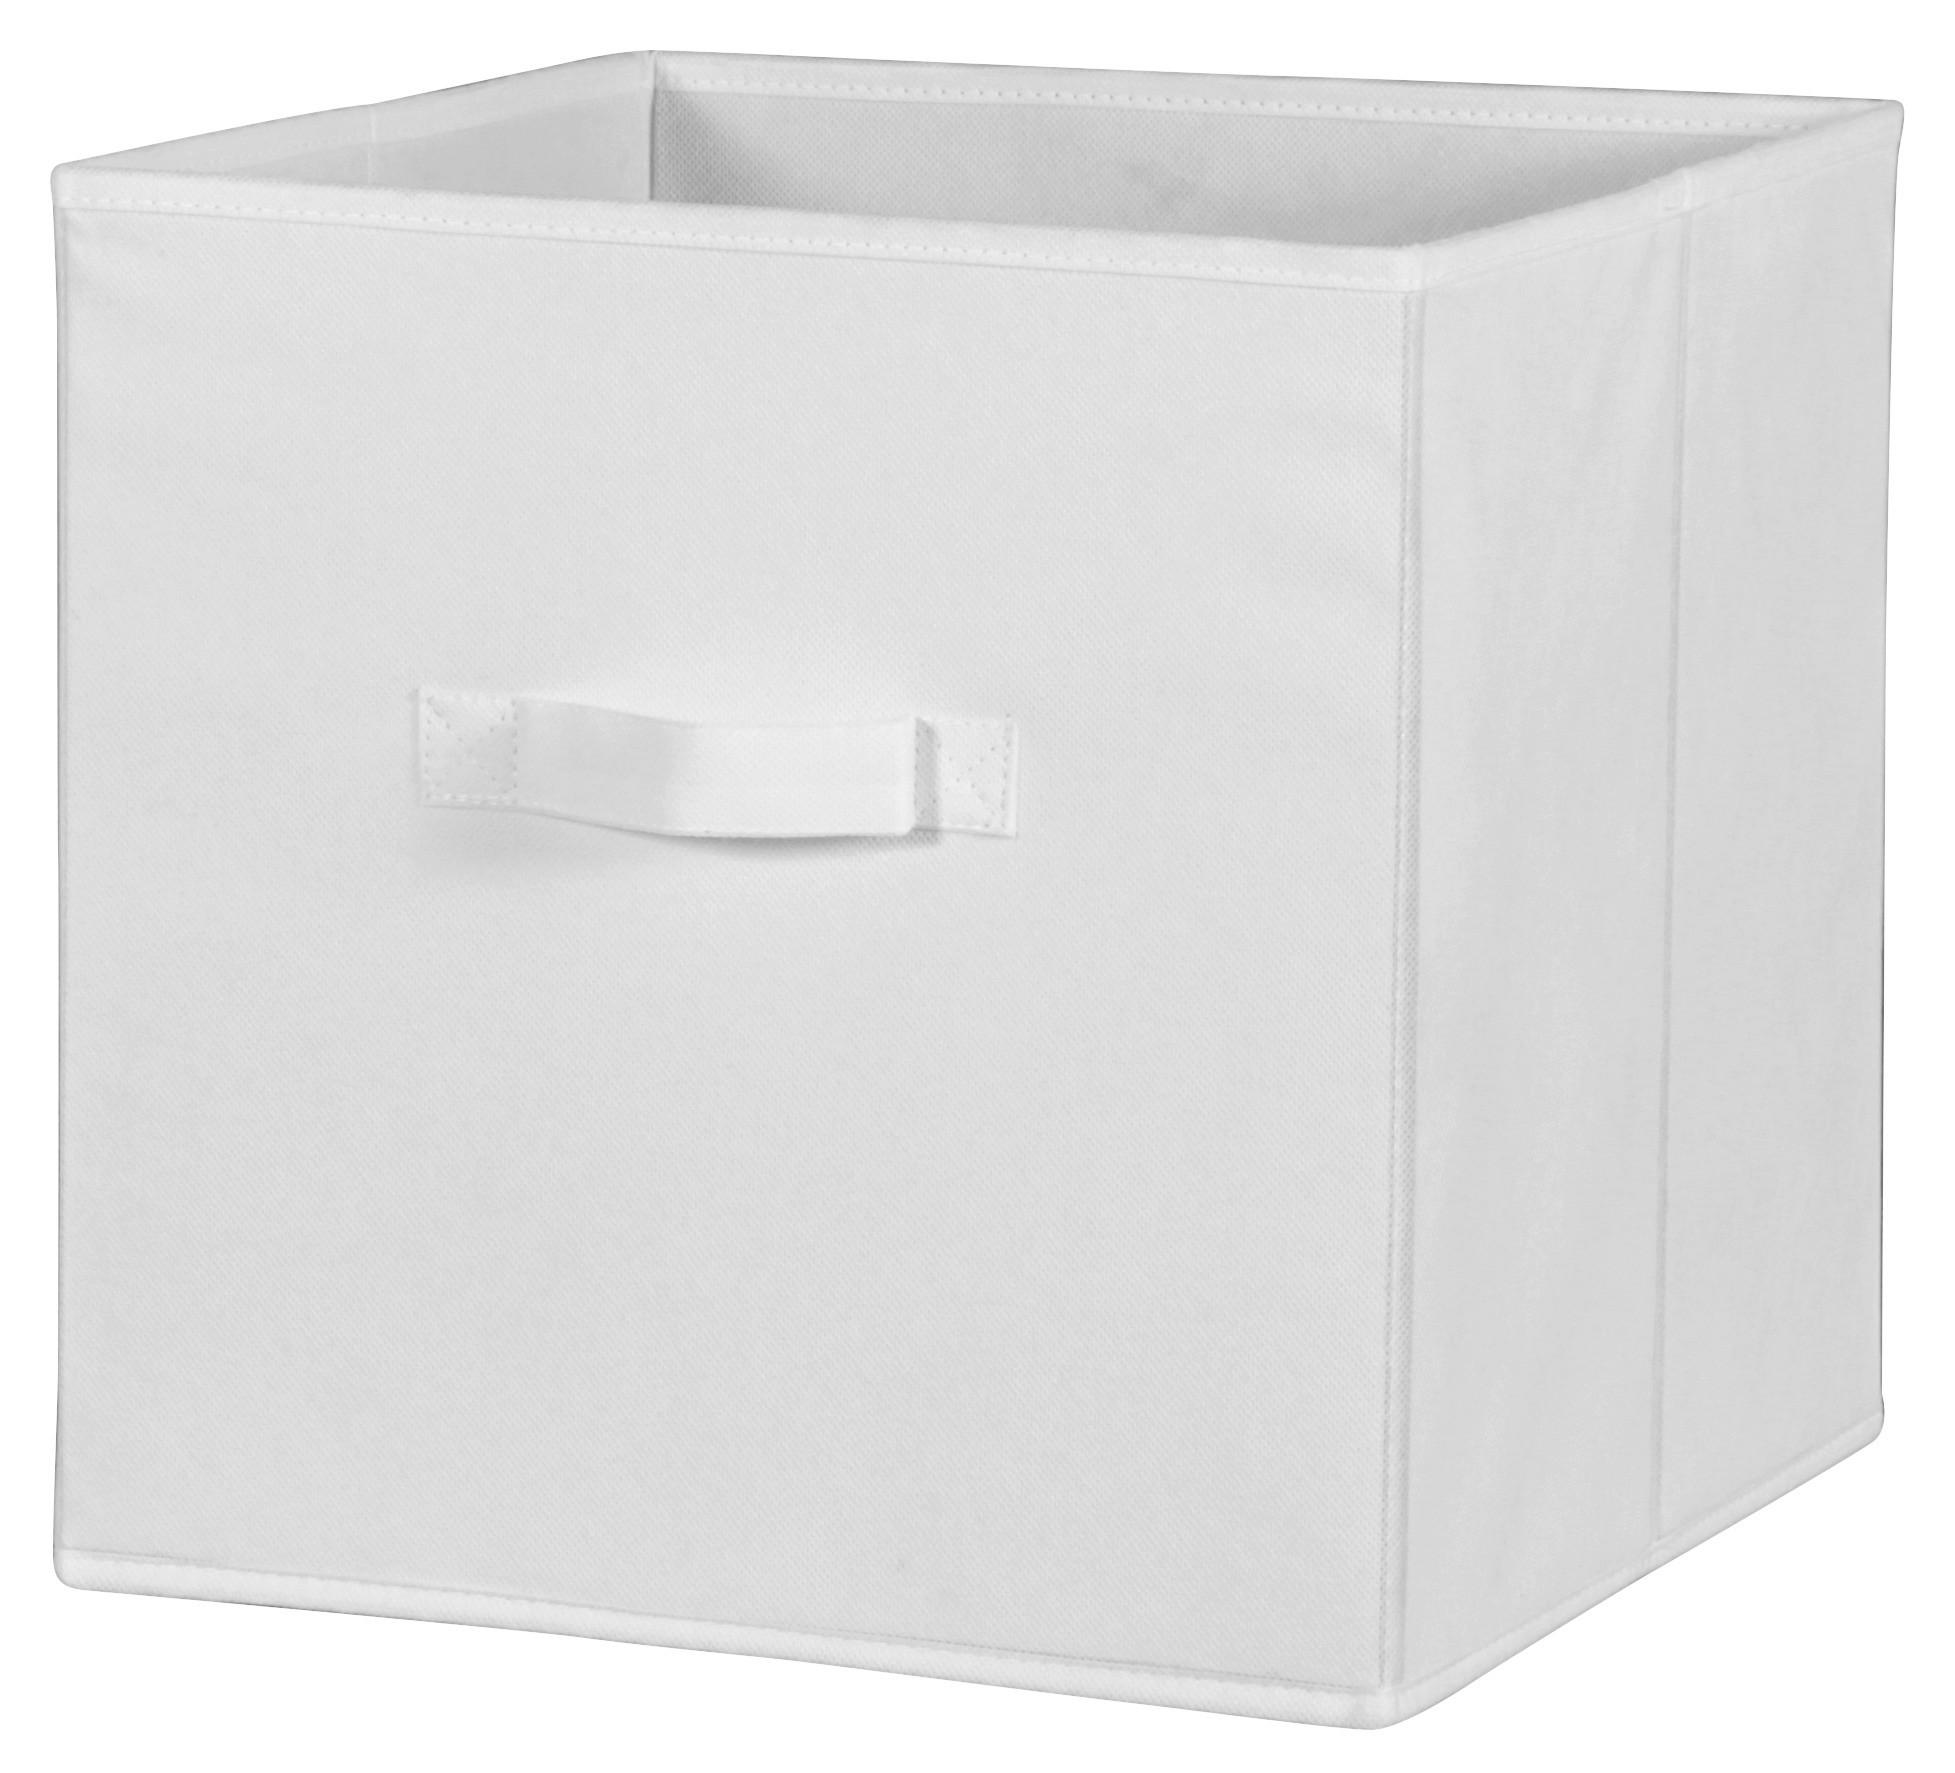 Skládací Krabice Cliff 3 - bílá, Moderní, textil (32/32/32cm)